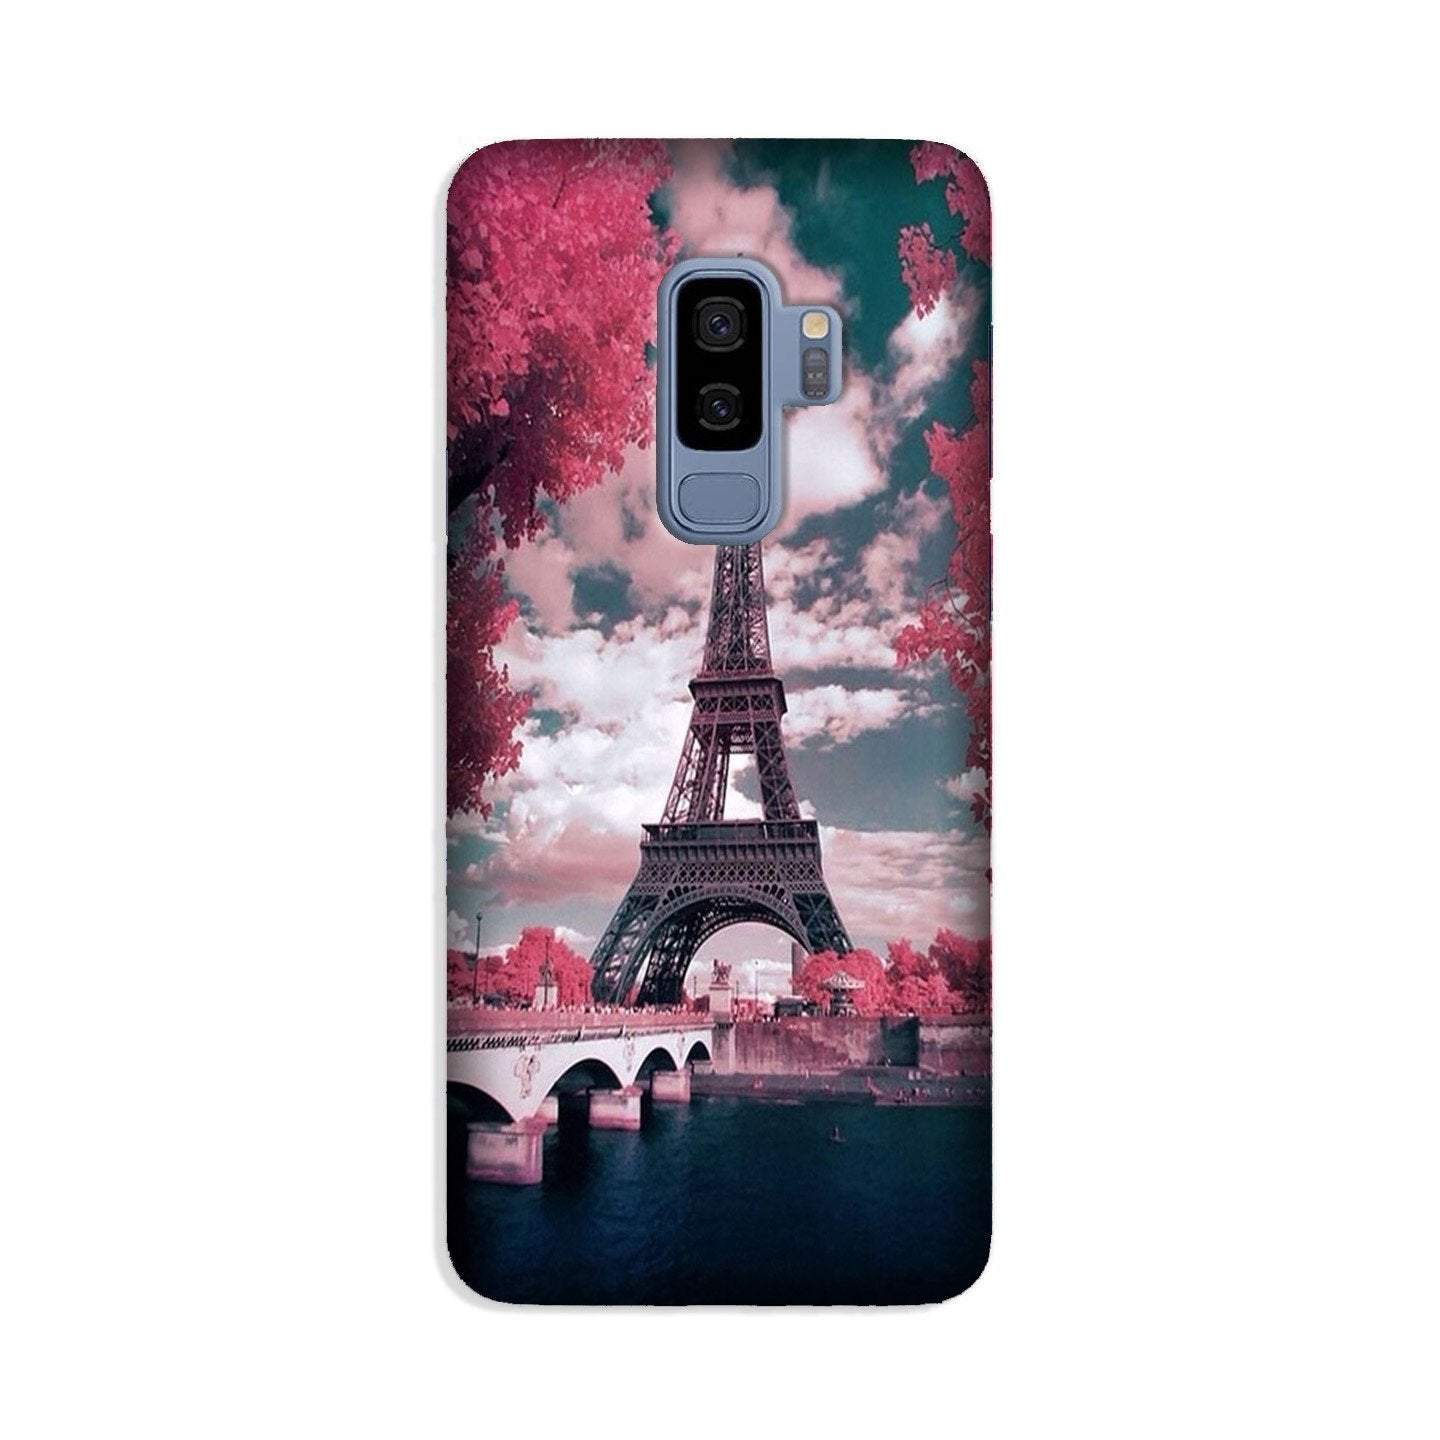 Eiffel Tower Case for Galaxy S9 Plus  (Design - 101)